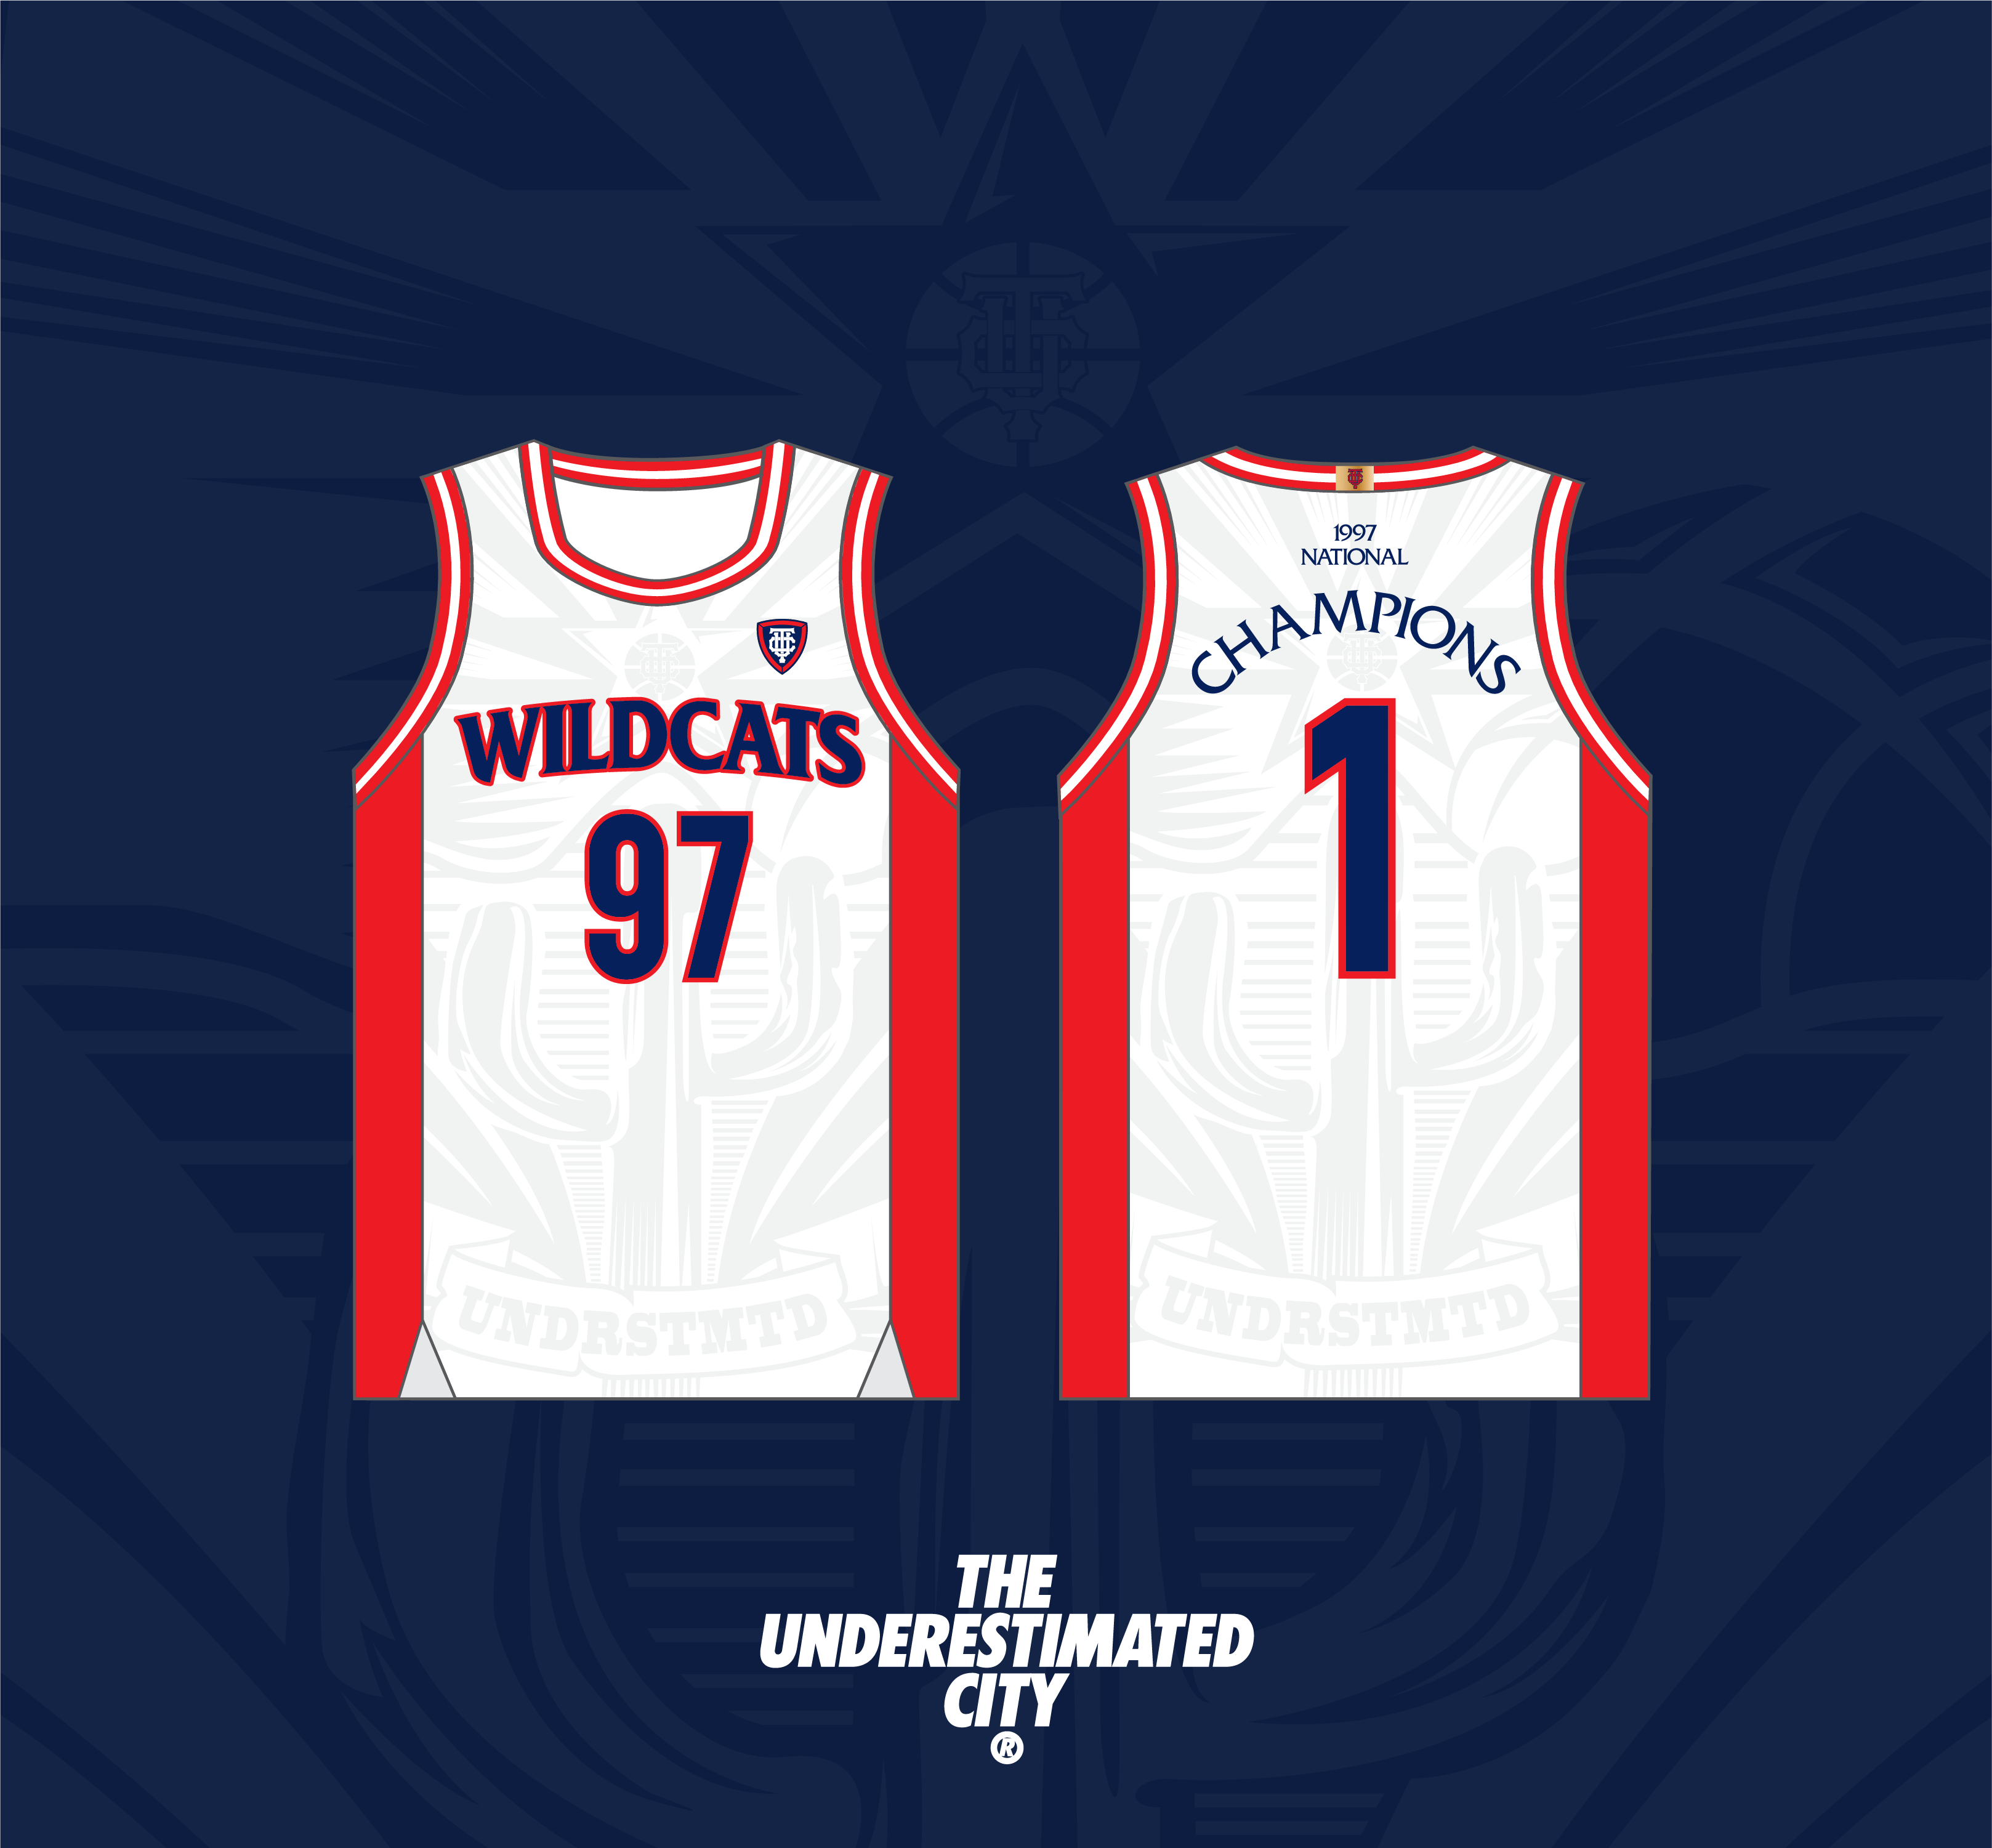 UA “Wildcat” Championship Jerseys – The Underestimated City